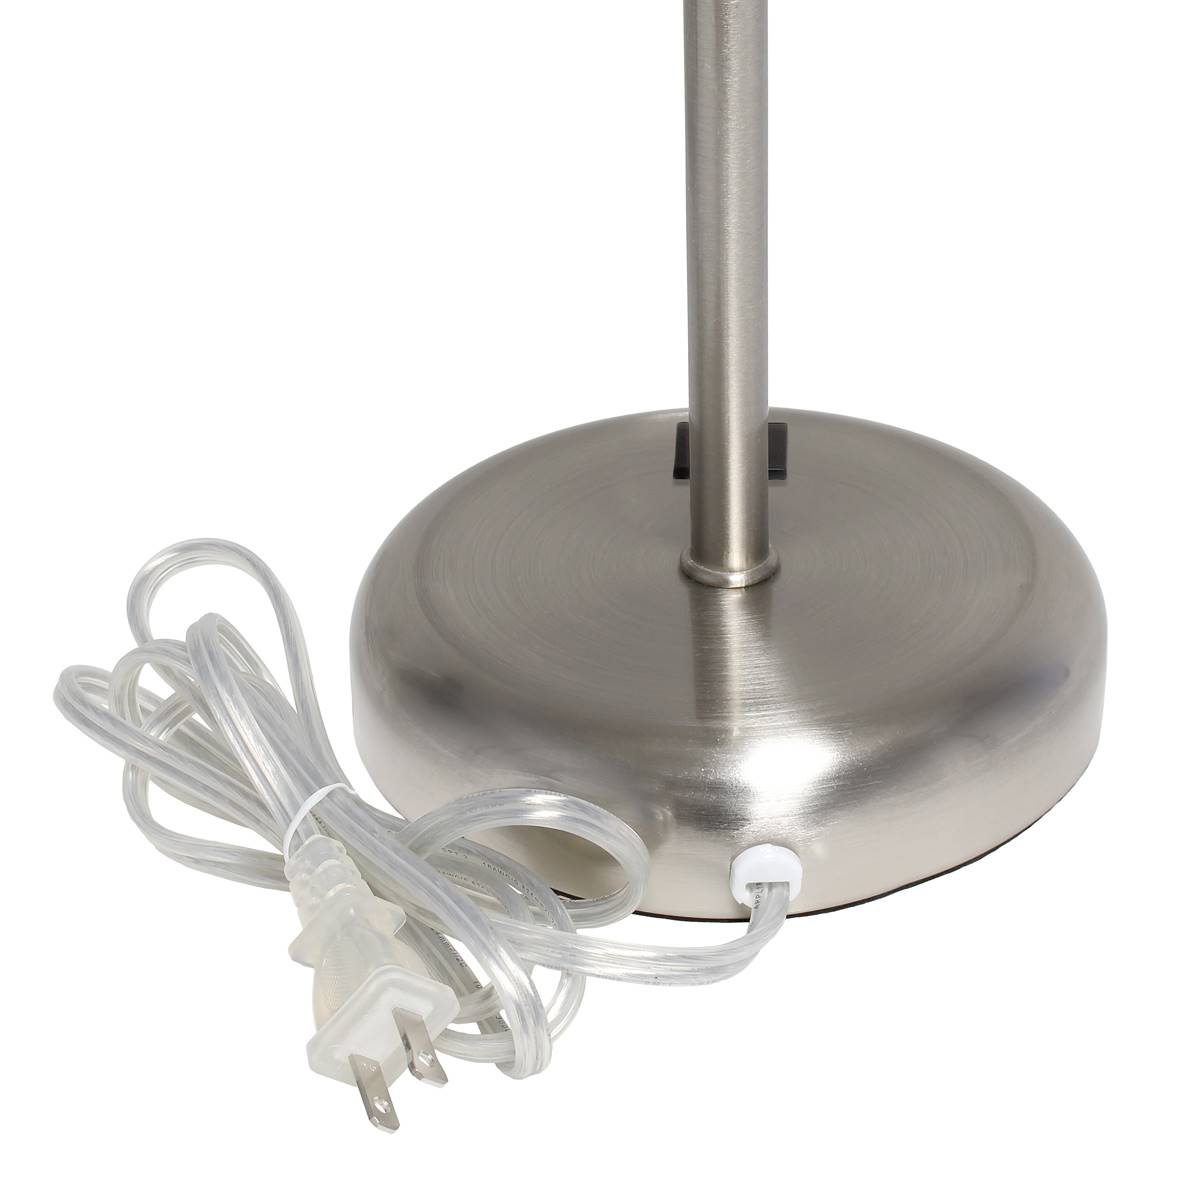 LimeLights Brushed Steel Stick Lamp W/USB Charging Port & Shade